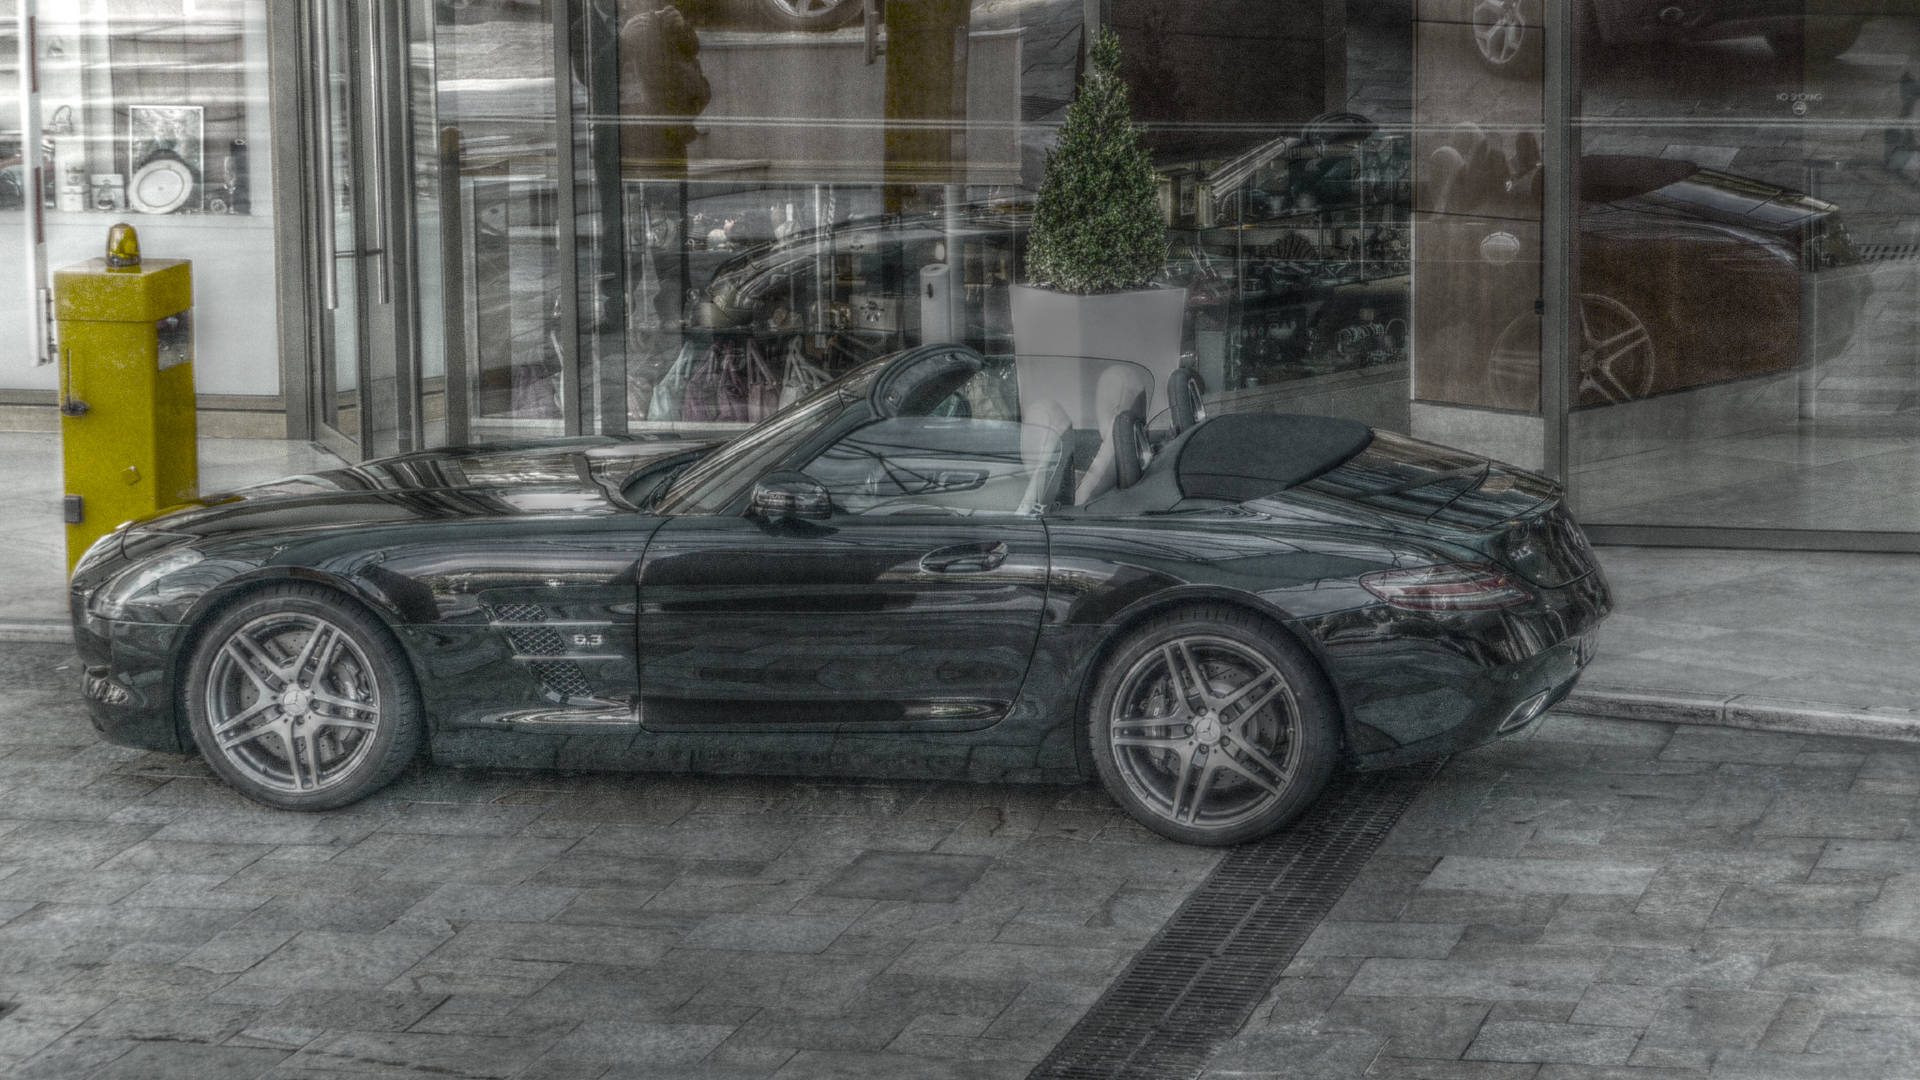 Hd Mercedes In Metallic Grey Paint Background